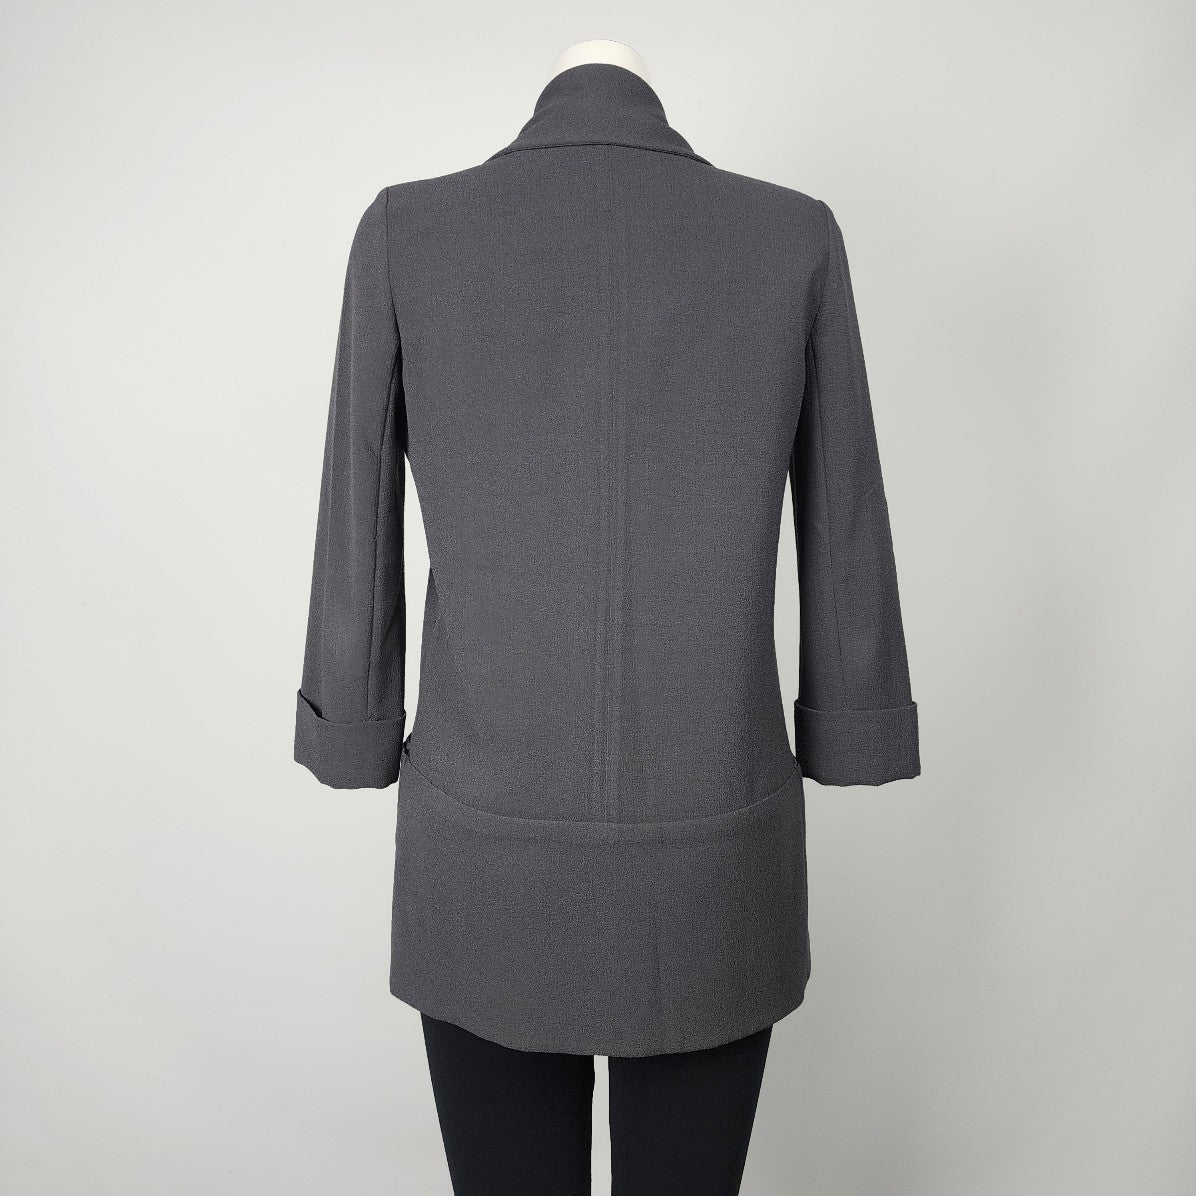 Wilfred Grey Crepe Chevalier Jacket Blazer Size 2